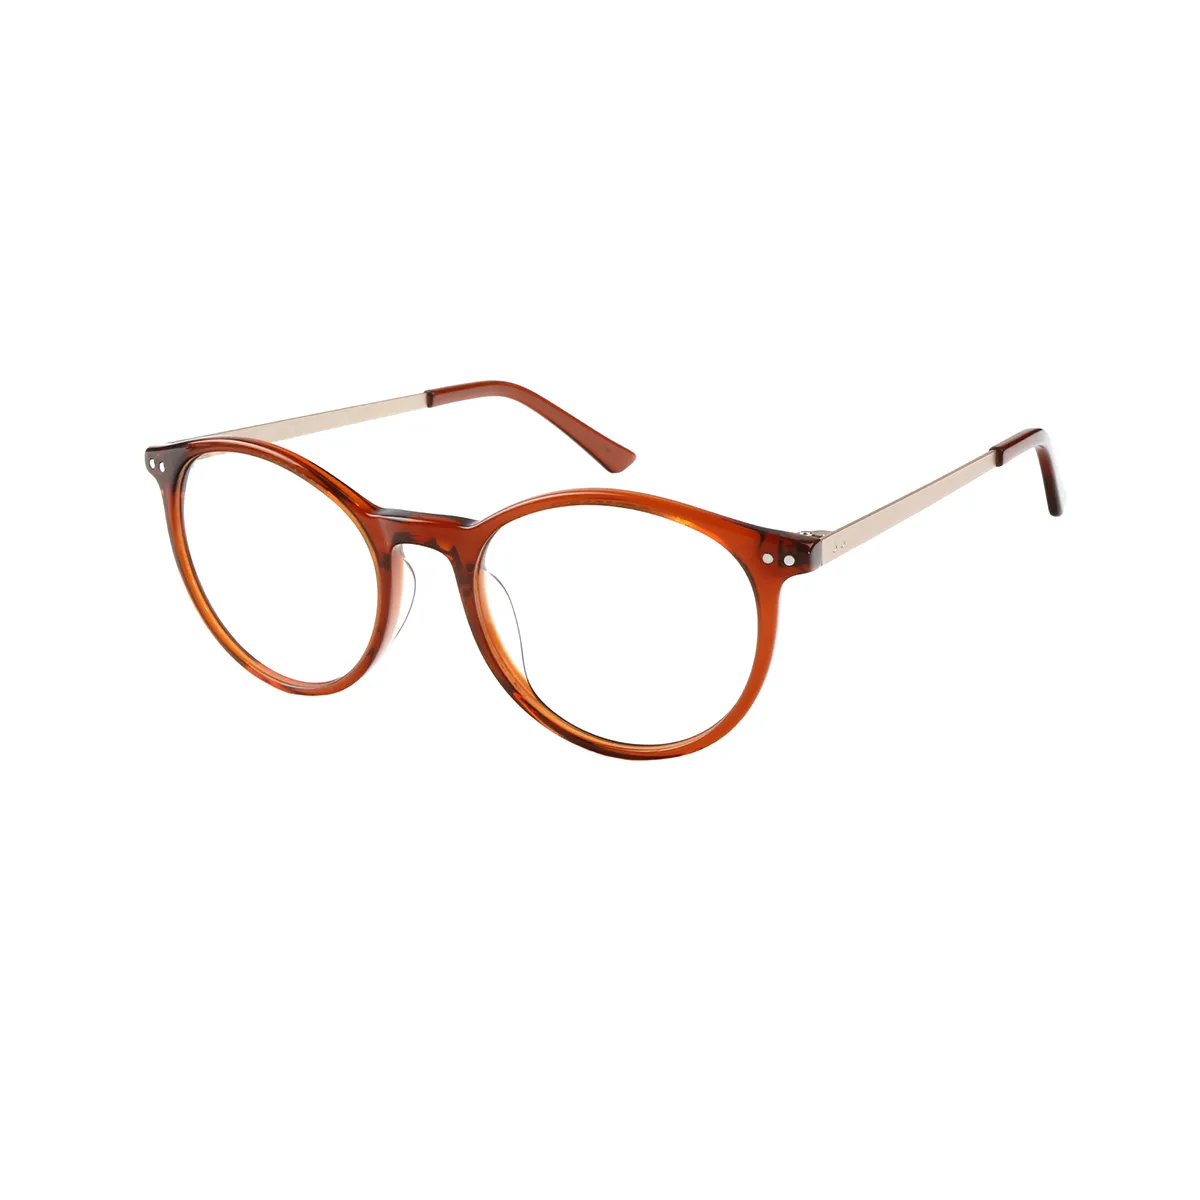 Kenna - Oval Brown Glasses for Men & Women - EFE